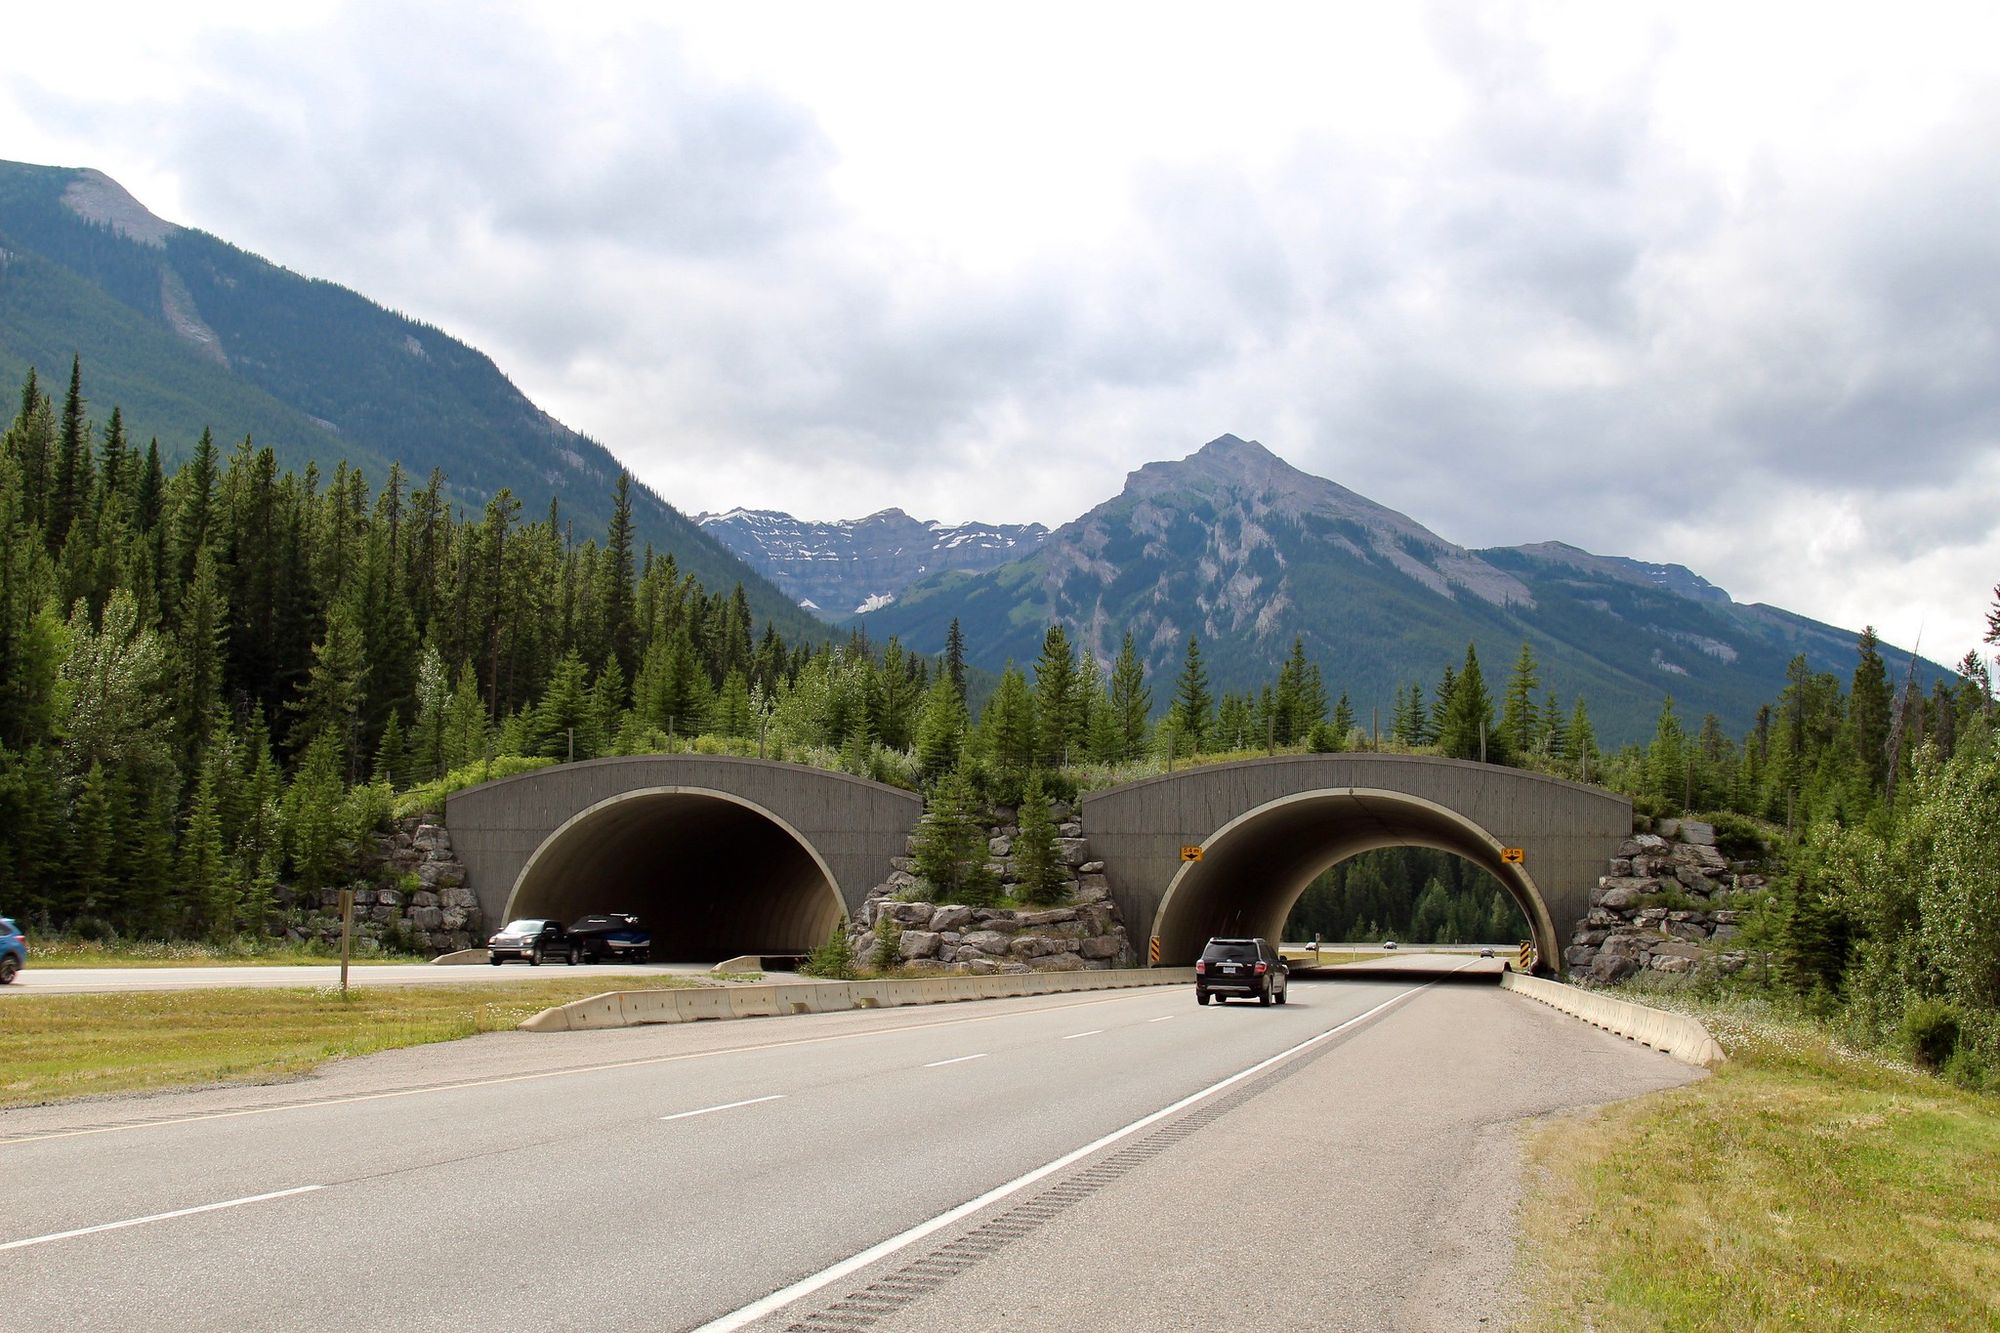 Trans-Canada Highway segments